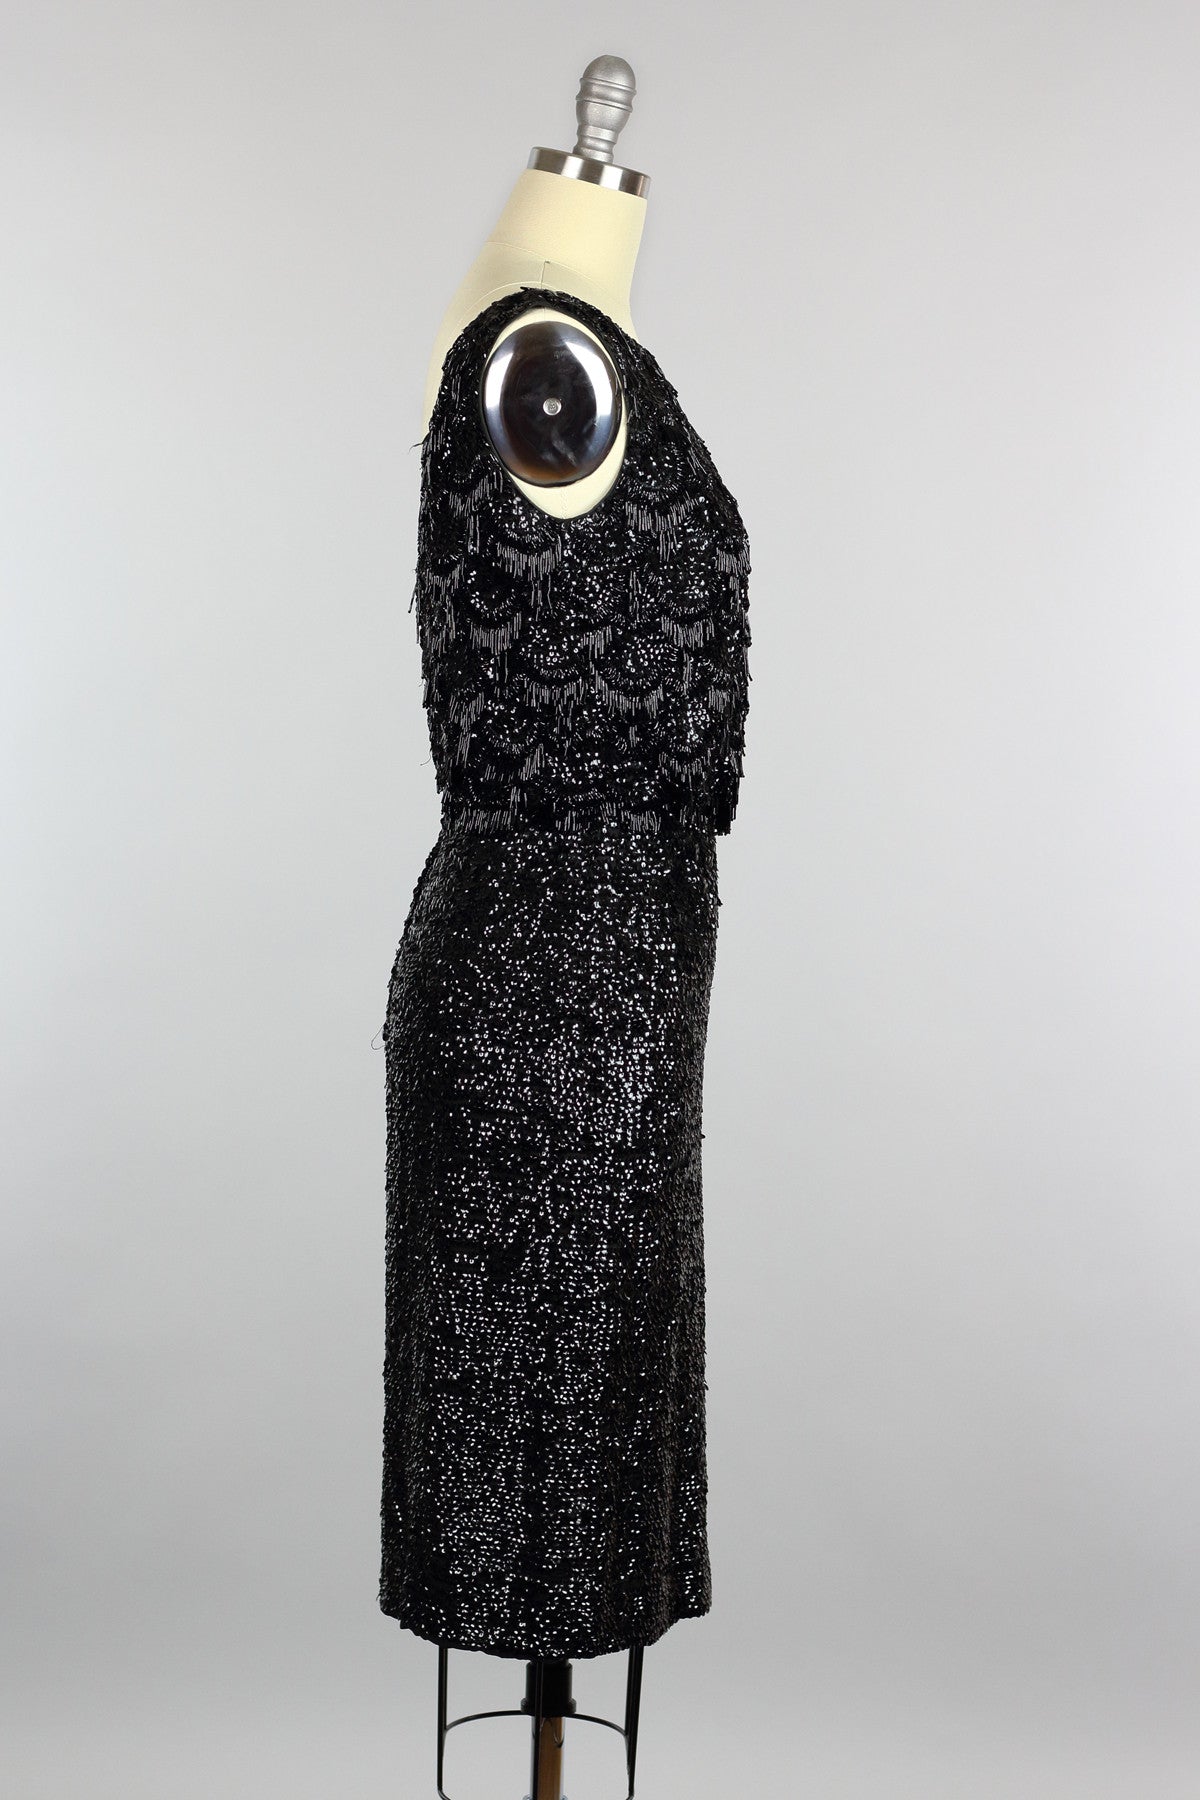 Stunning Vintage 1960s Hand Beaded Black Cocktail Dress